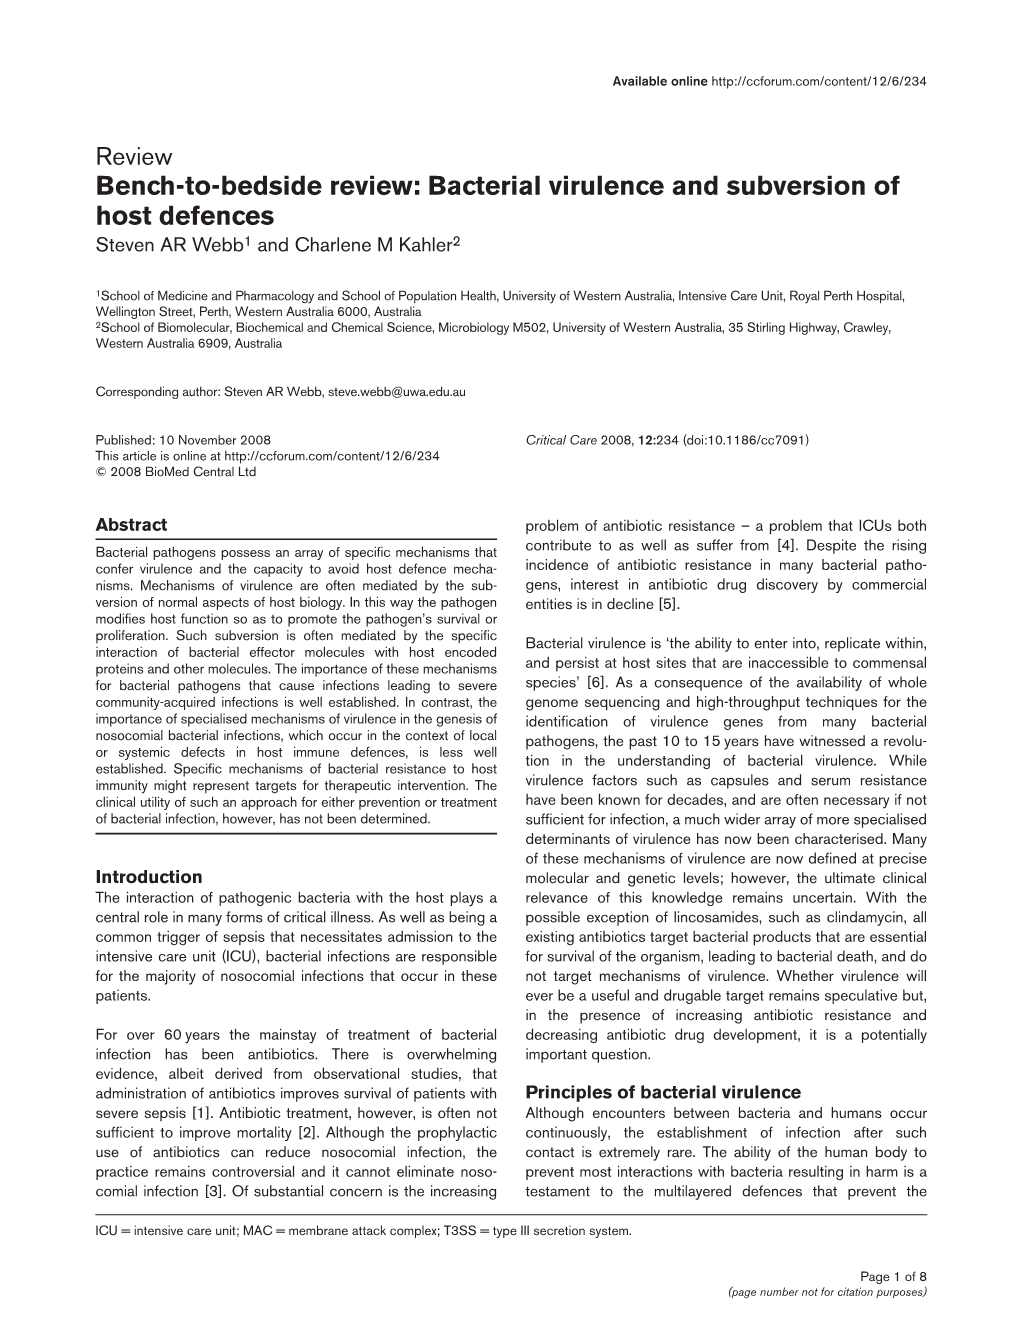 Bacterial Virulence and Subversion of Host Defences Steven AR Webb1 and Charlene M Kahler2